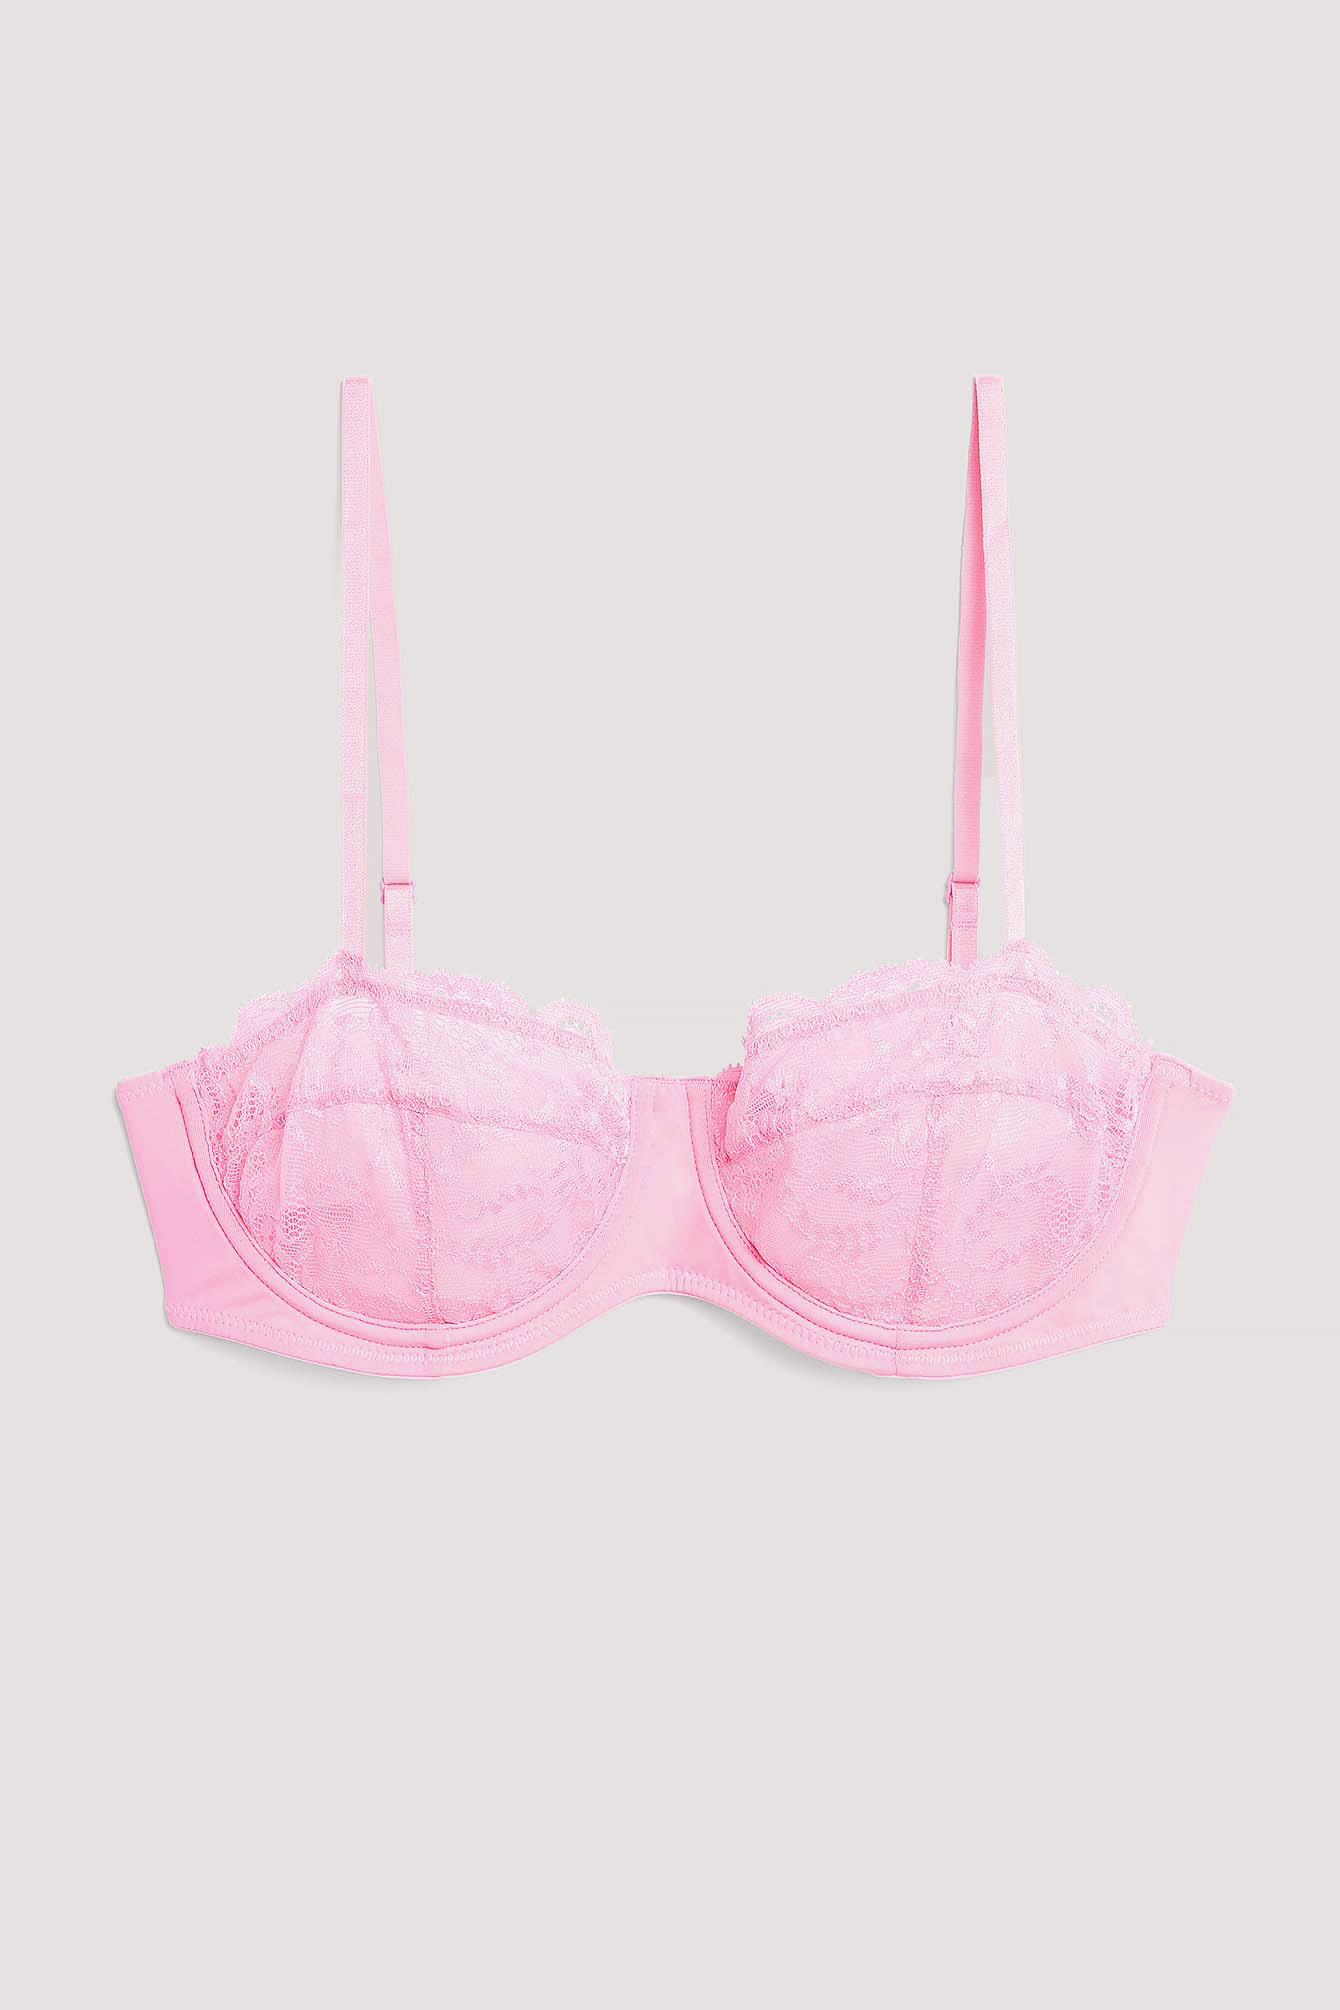 Victoria's Secret Dream Angles Bra 36B Push Up Silver Pink Lace